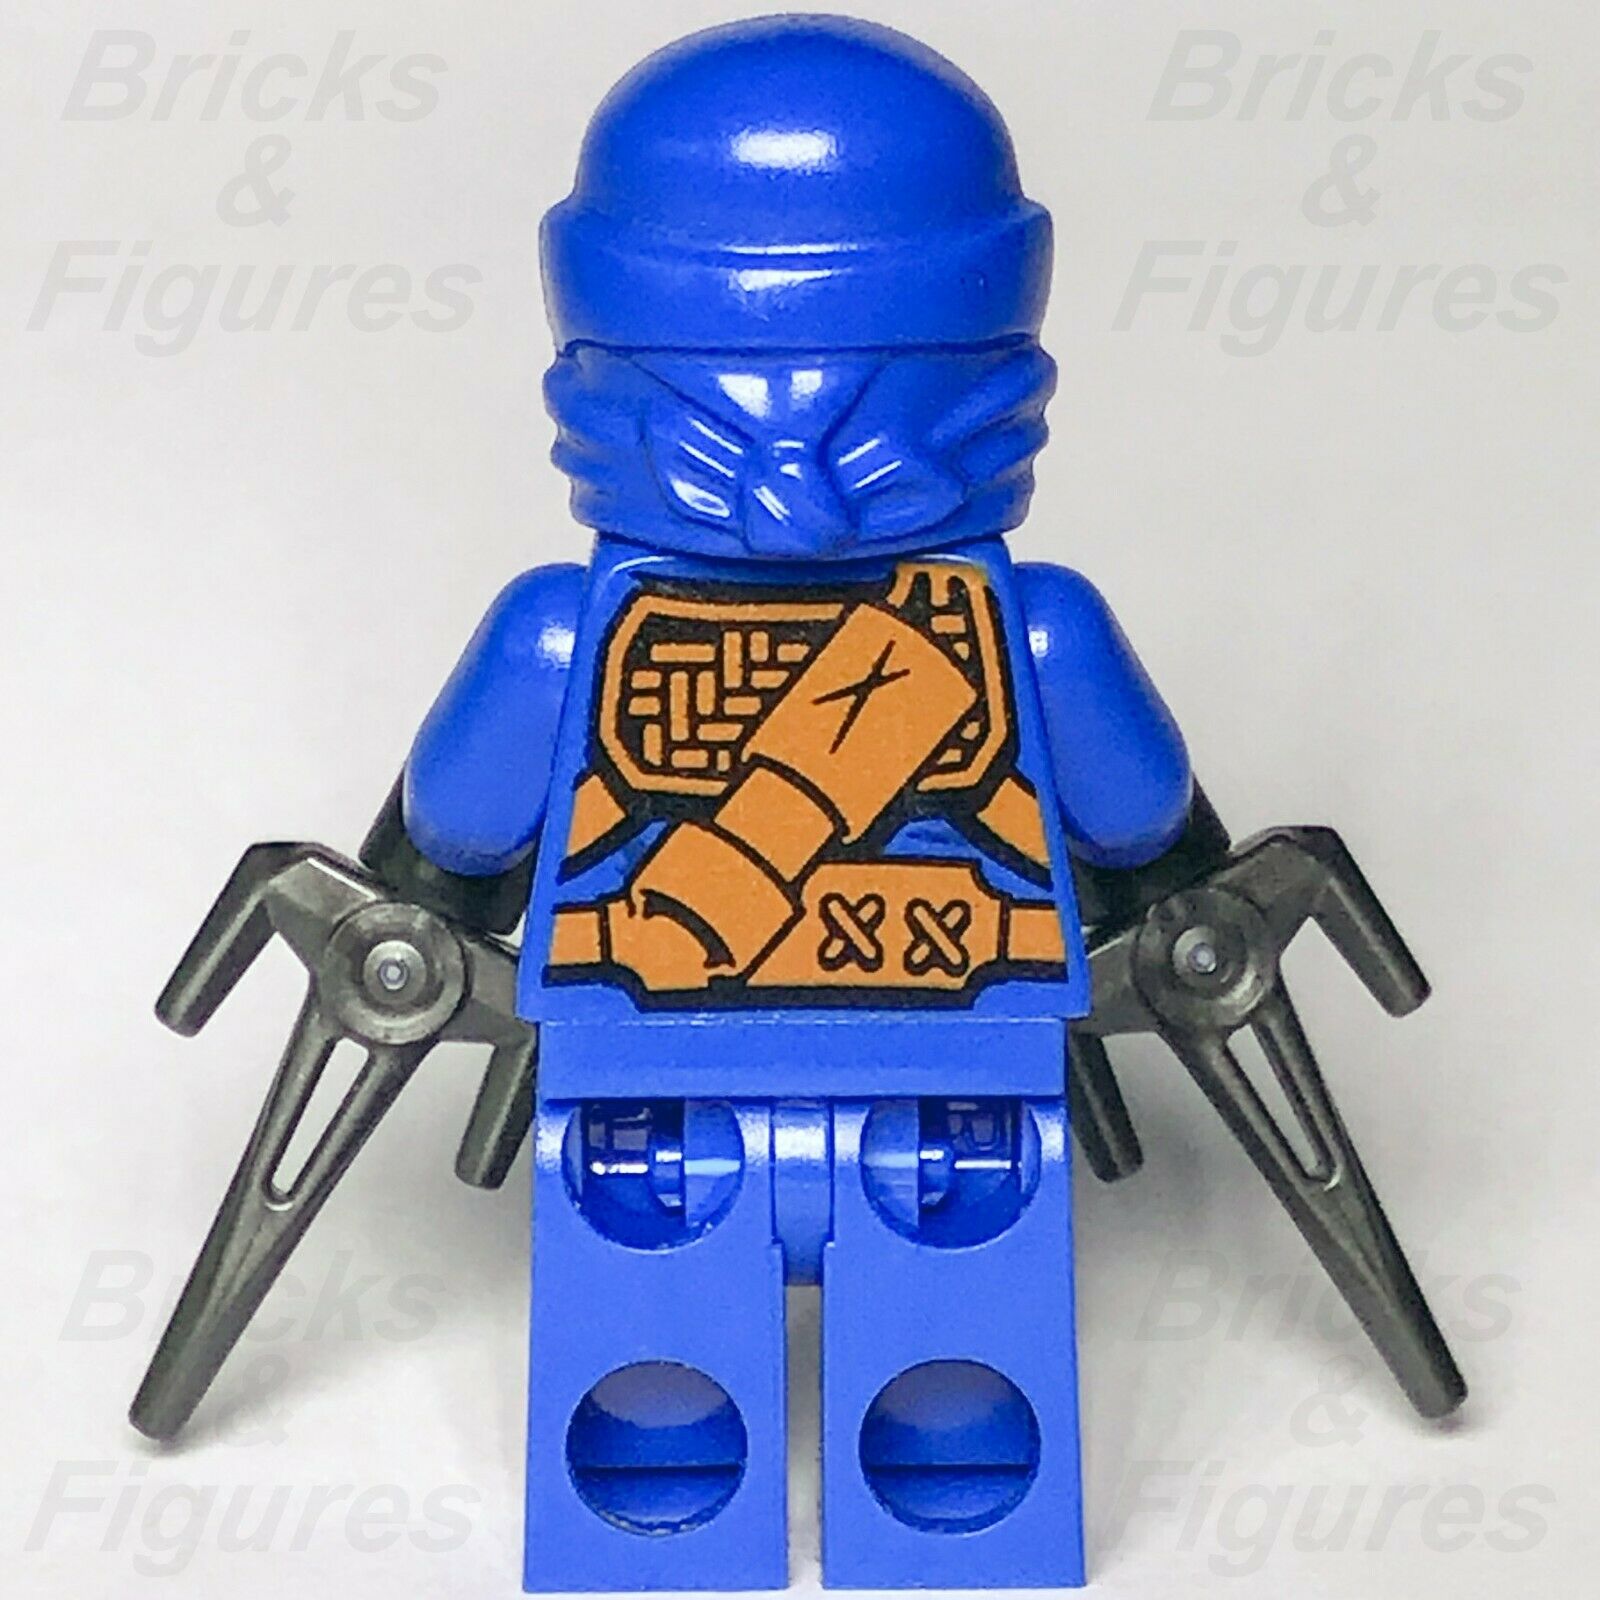 New Ninjago LEGO Ninja Jay Jungle Robe Tournament of Elements Minifigure 70749 - Bricks & Figures